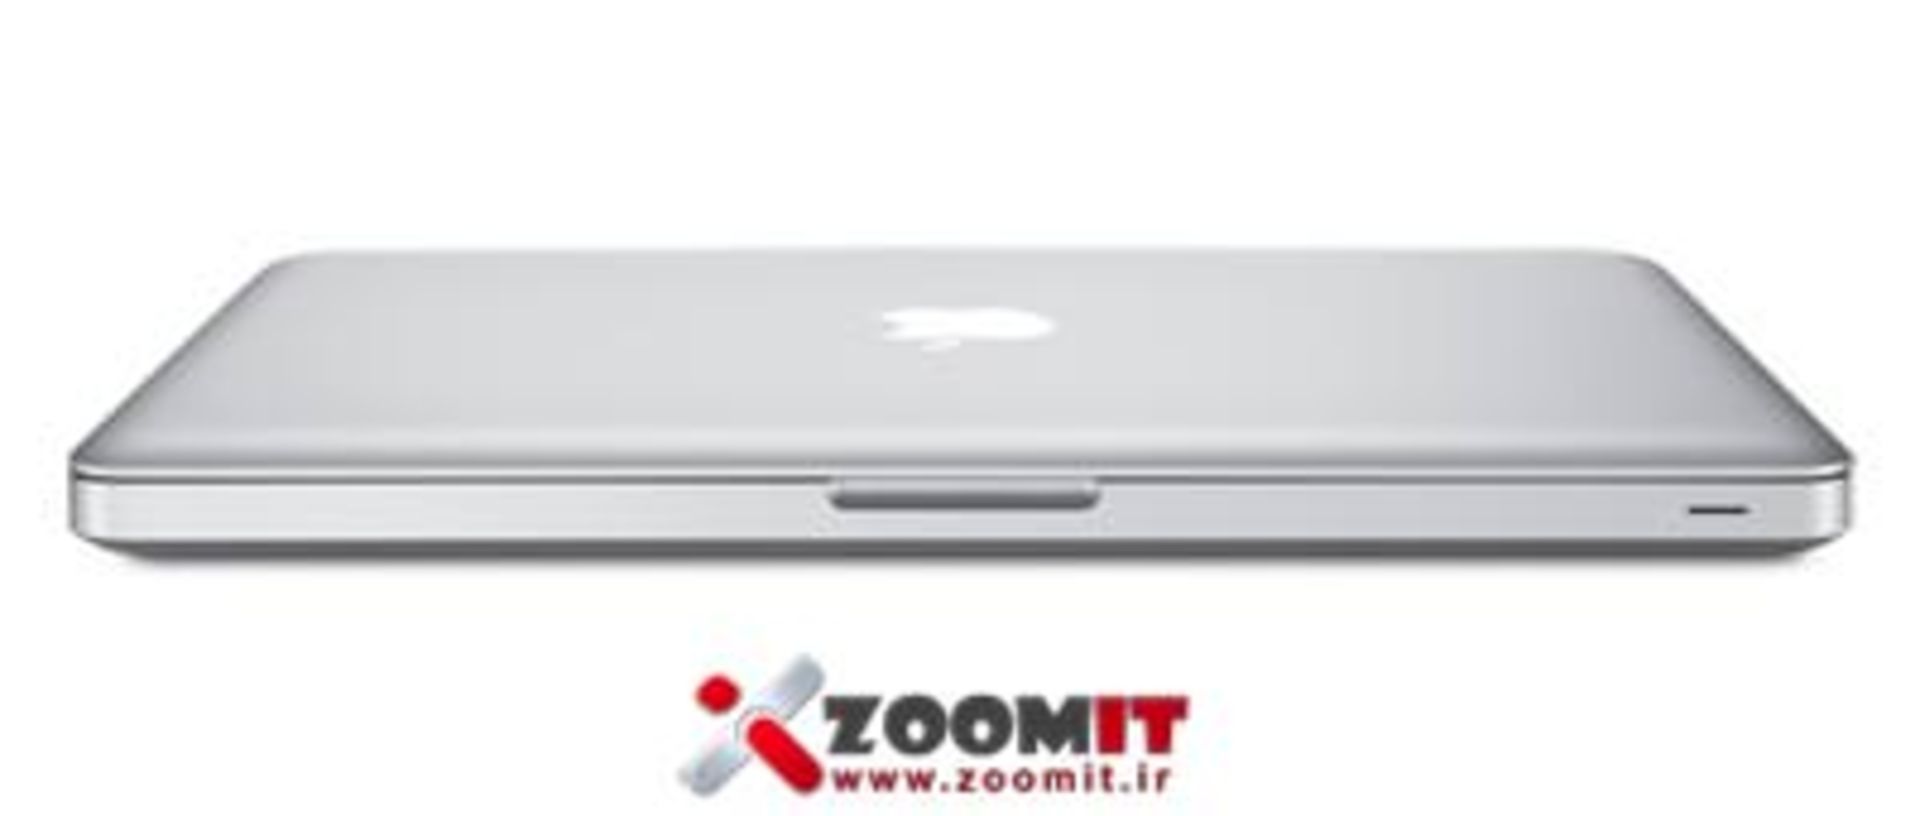 macbook-pro-2011-review-2